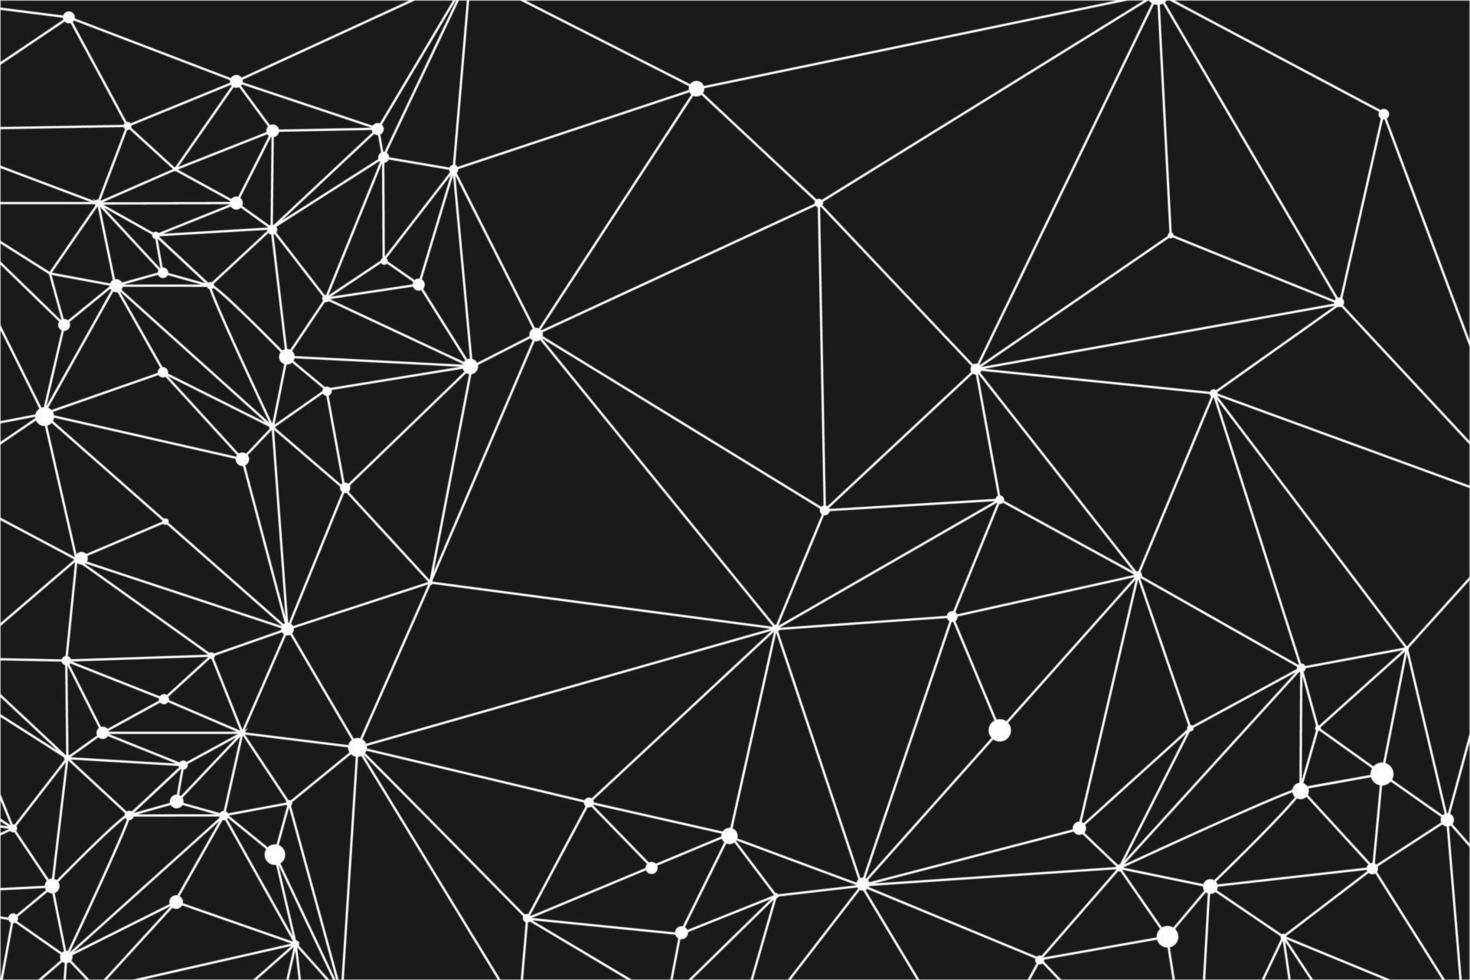 forskningselement i visualisering av big data. svart abstrakt bakgrund med plexus linjer och noder. geometrisk vetenskap design vektor